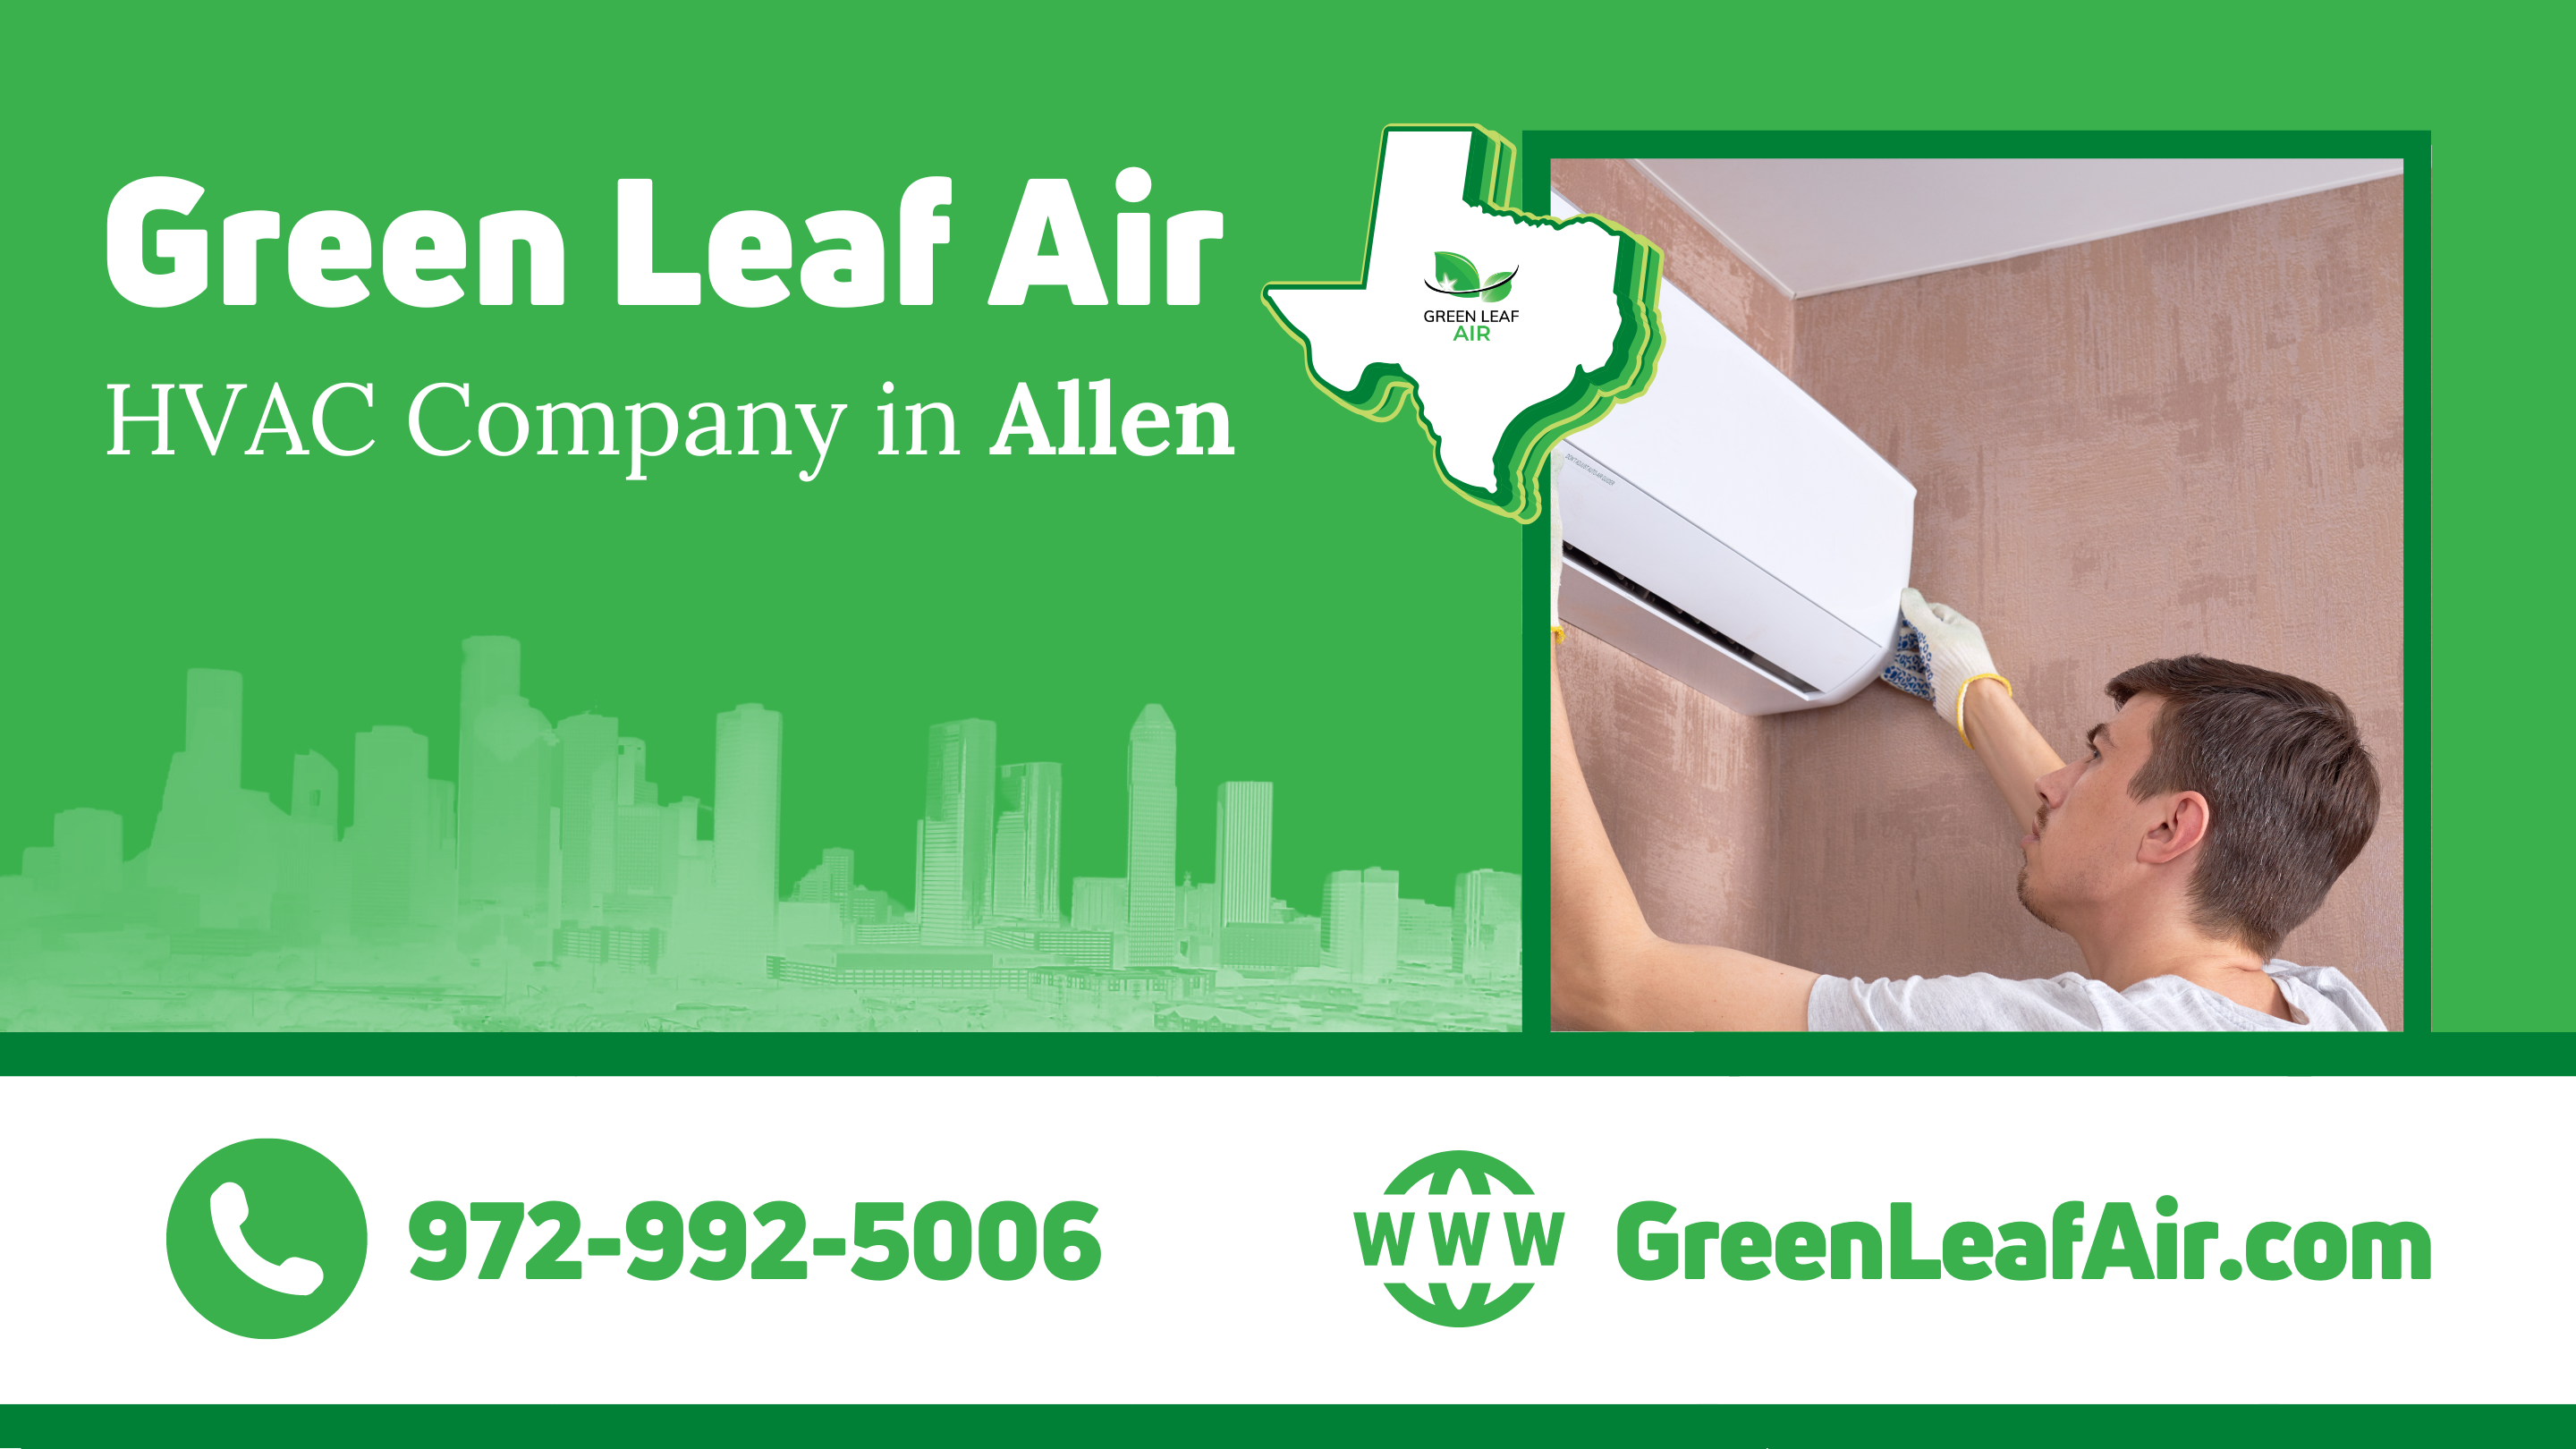 Green Leaf Air — HVAC Company in Allen, Texas